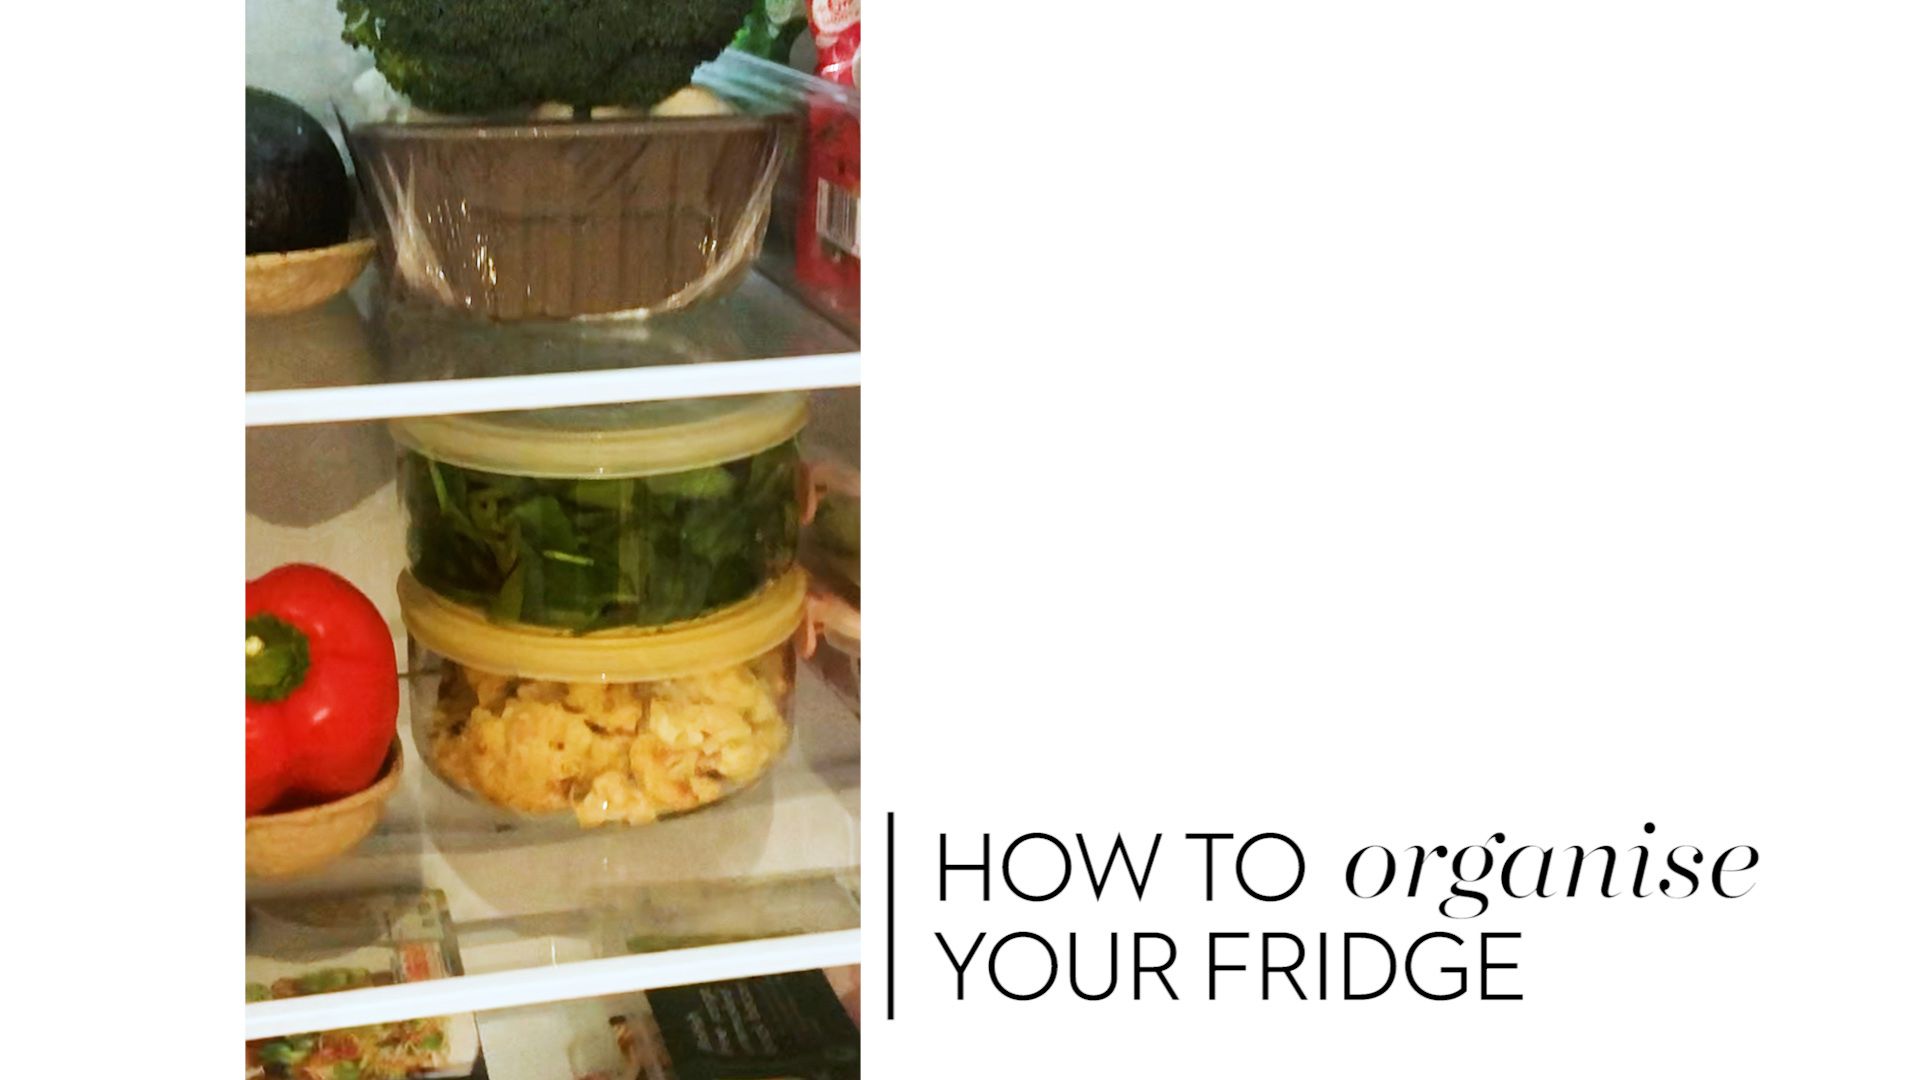 How to Organize Your Fridge